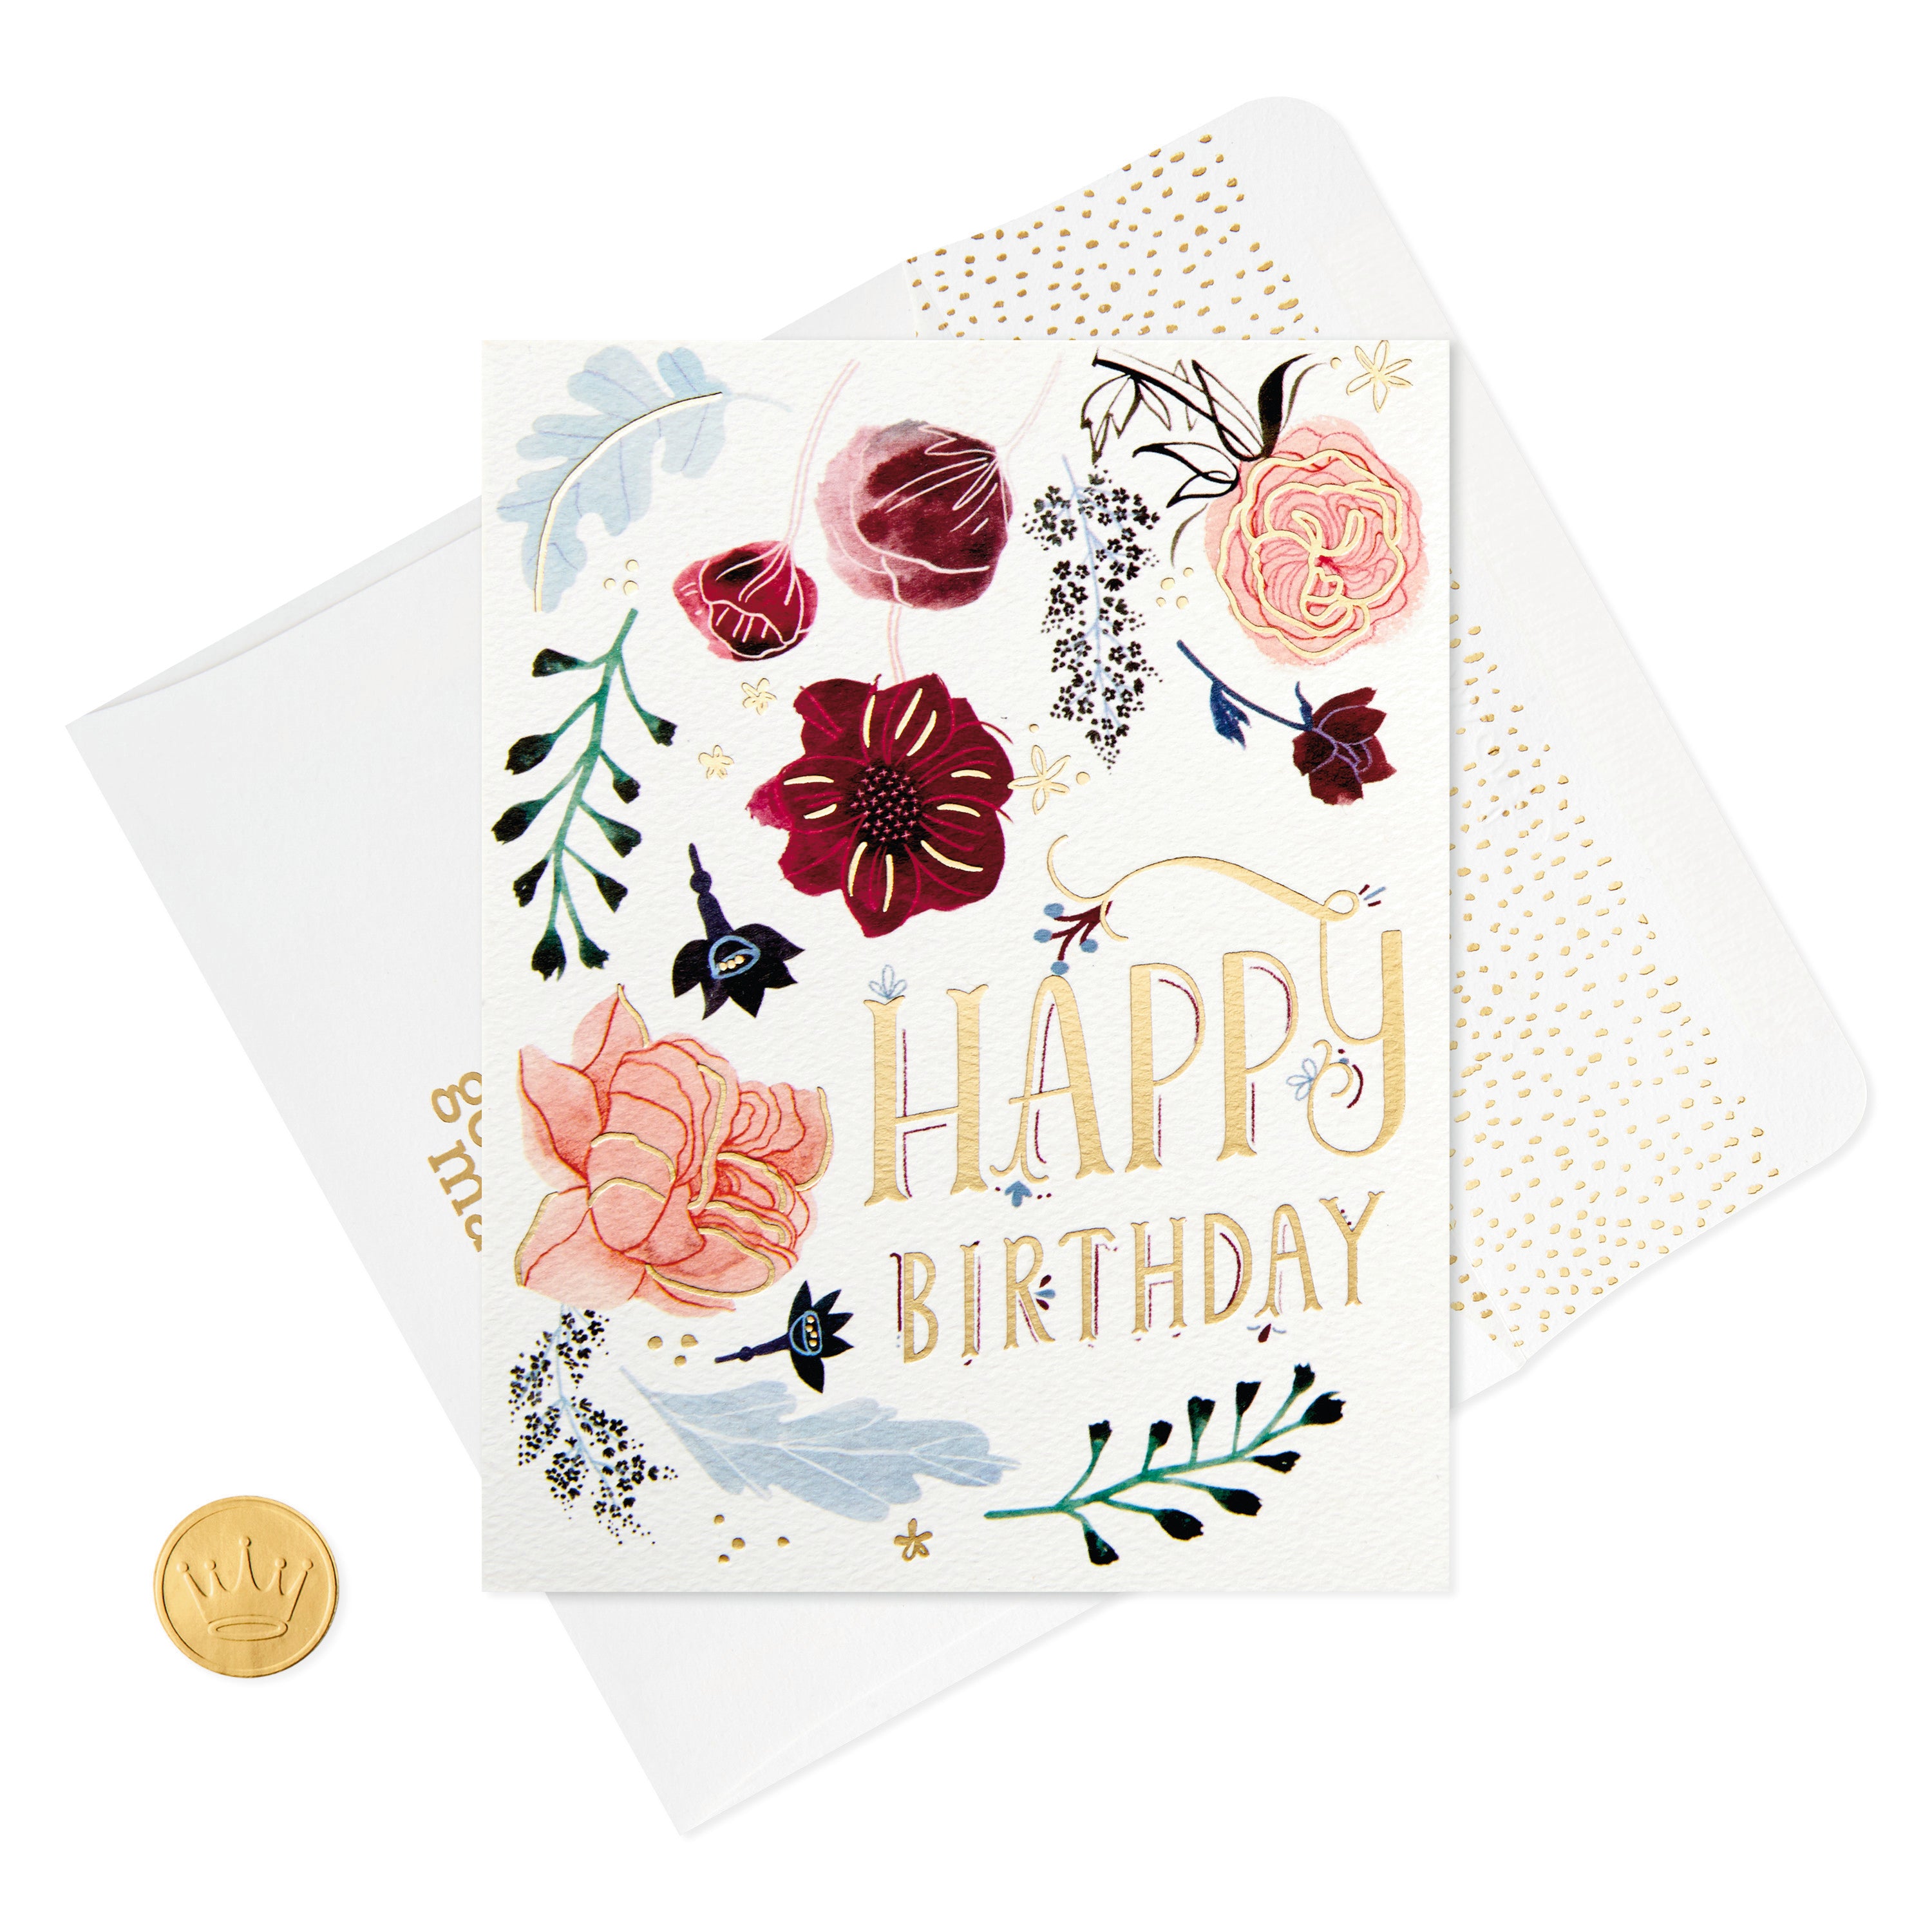  Good Mail Birthday Card for Women (Happy Year Ahead)